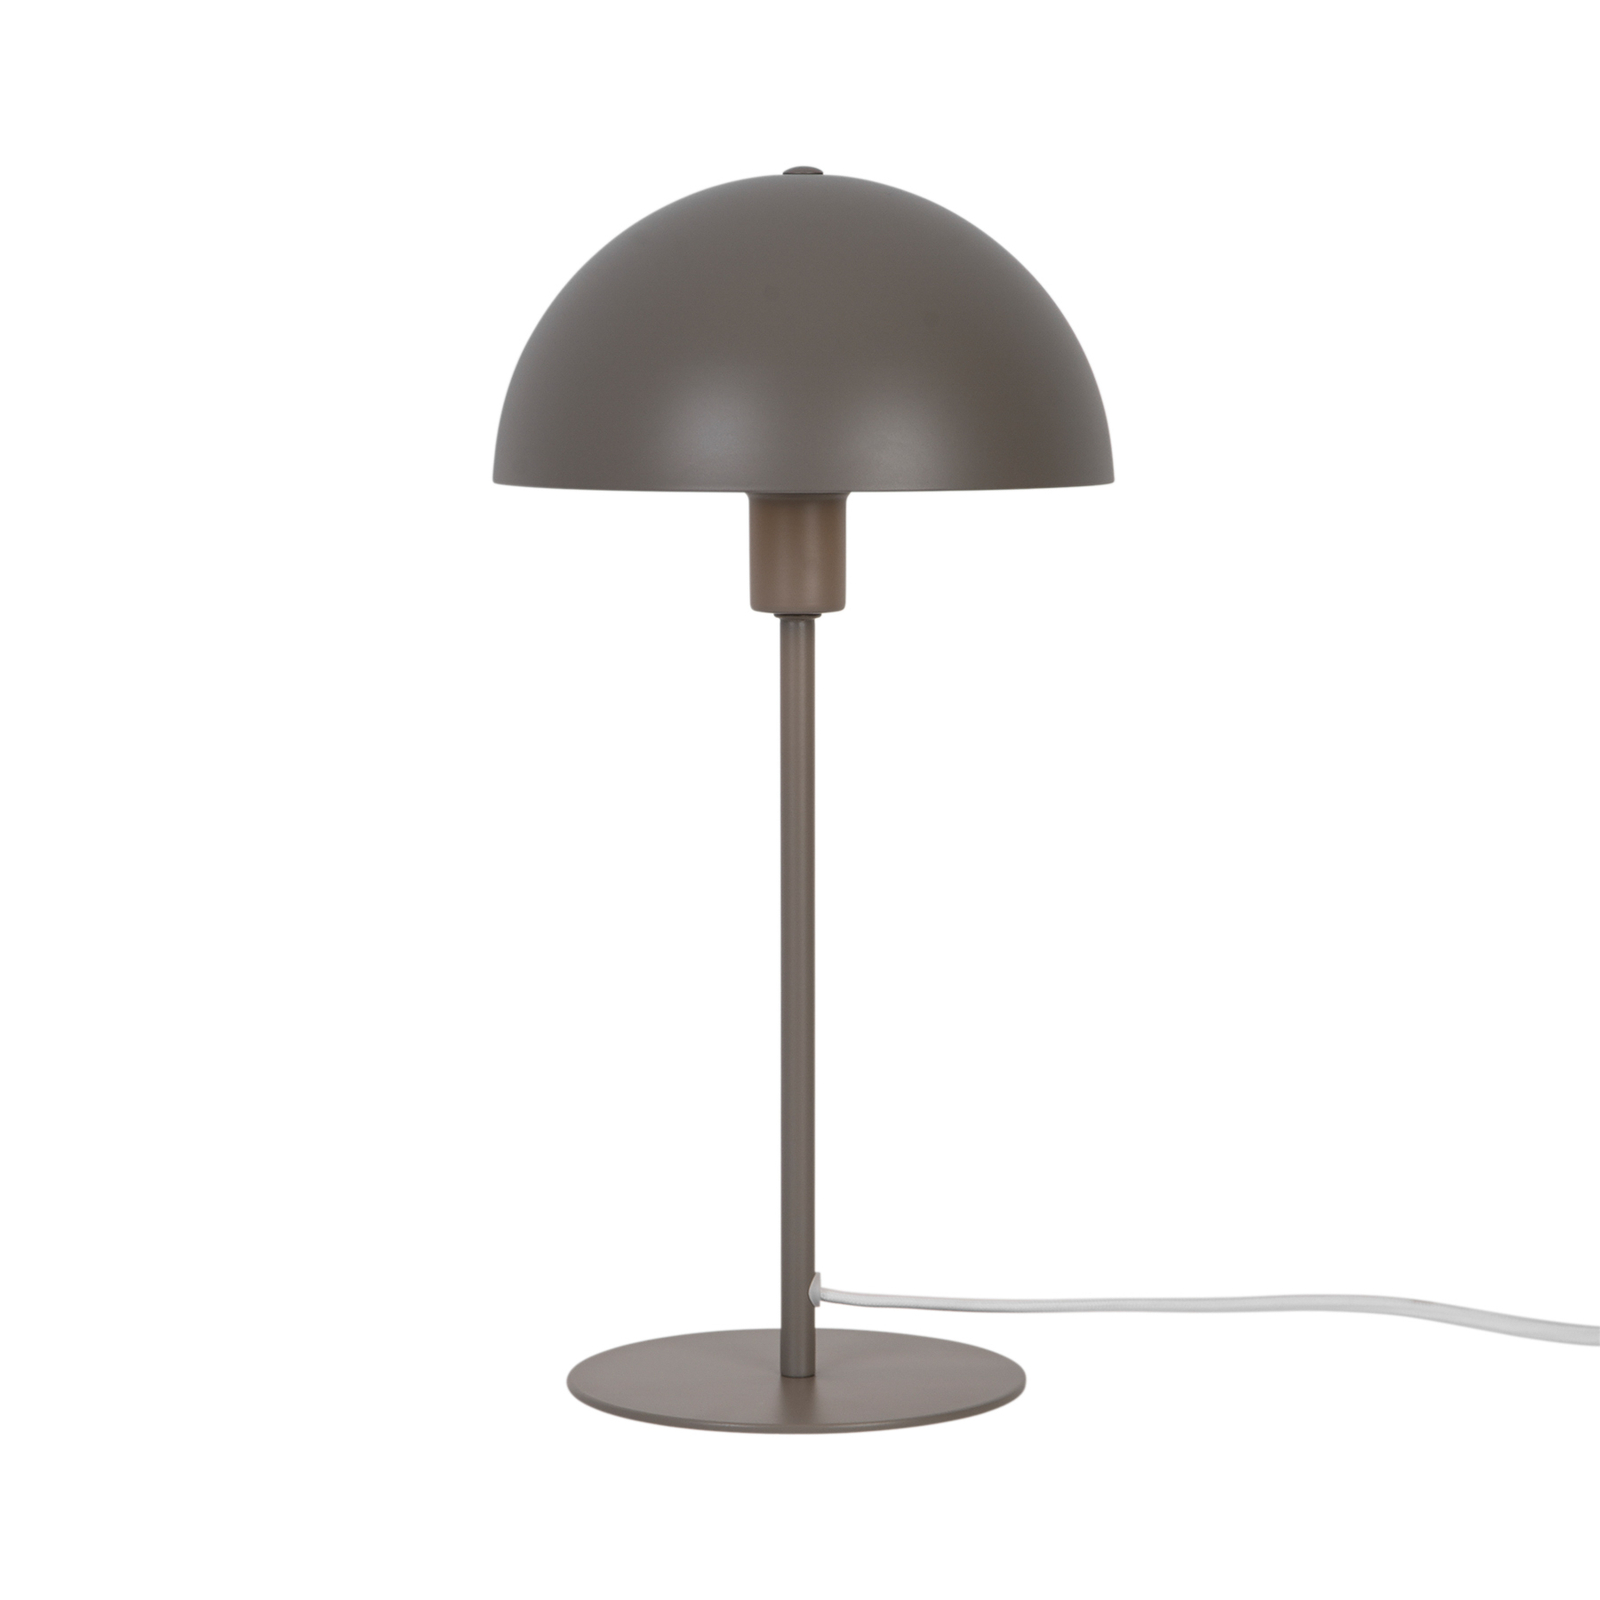 Ellen 20 table lamp made of metal, beige